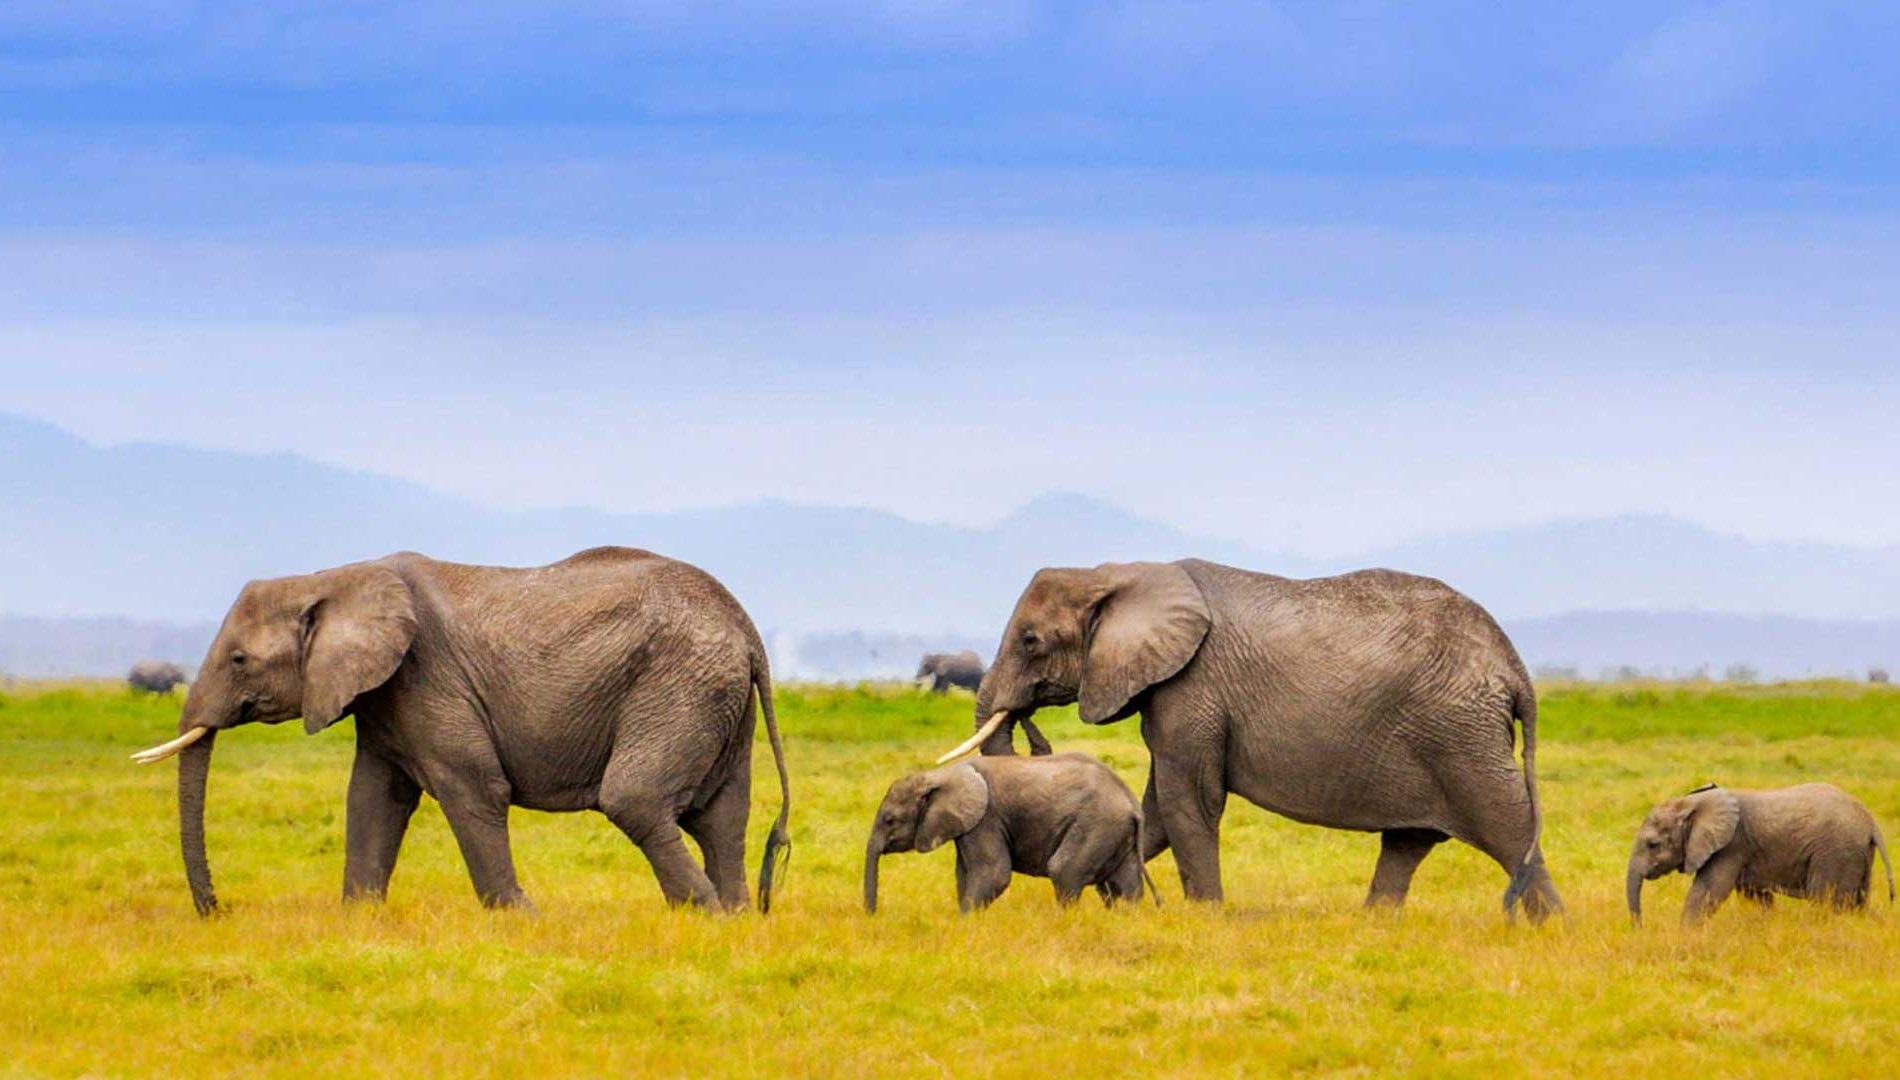 Elephants-in-nothern-Tanzania